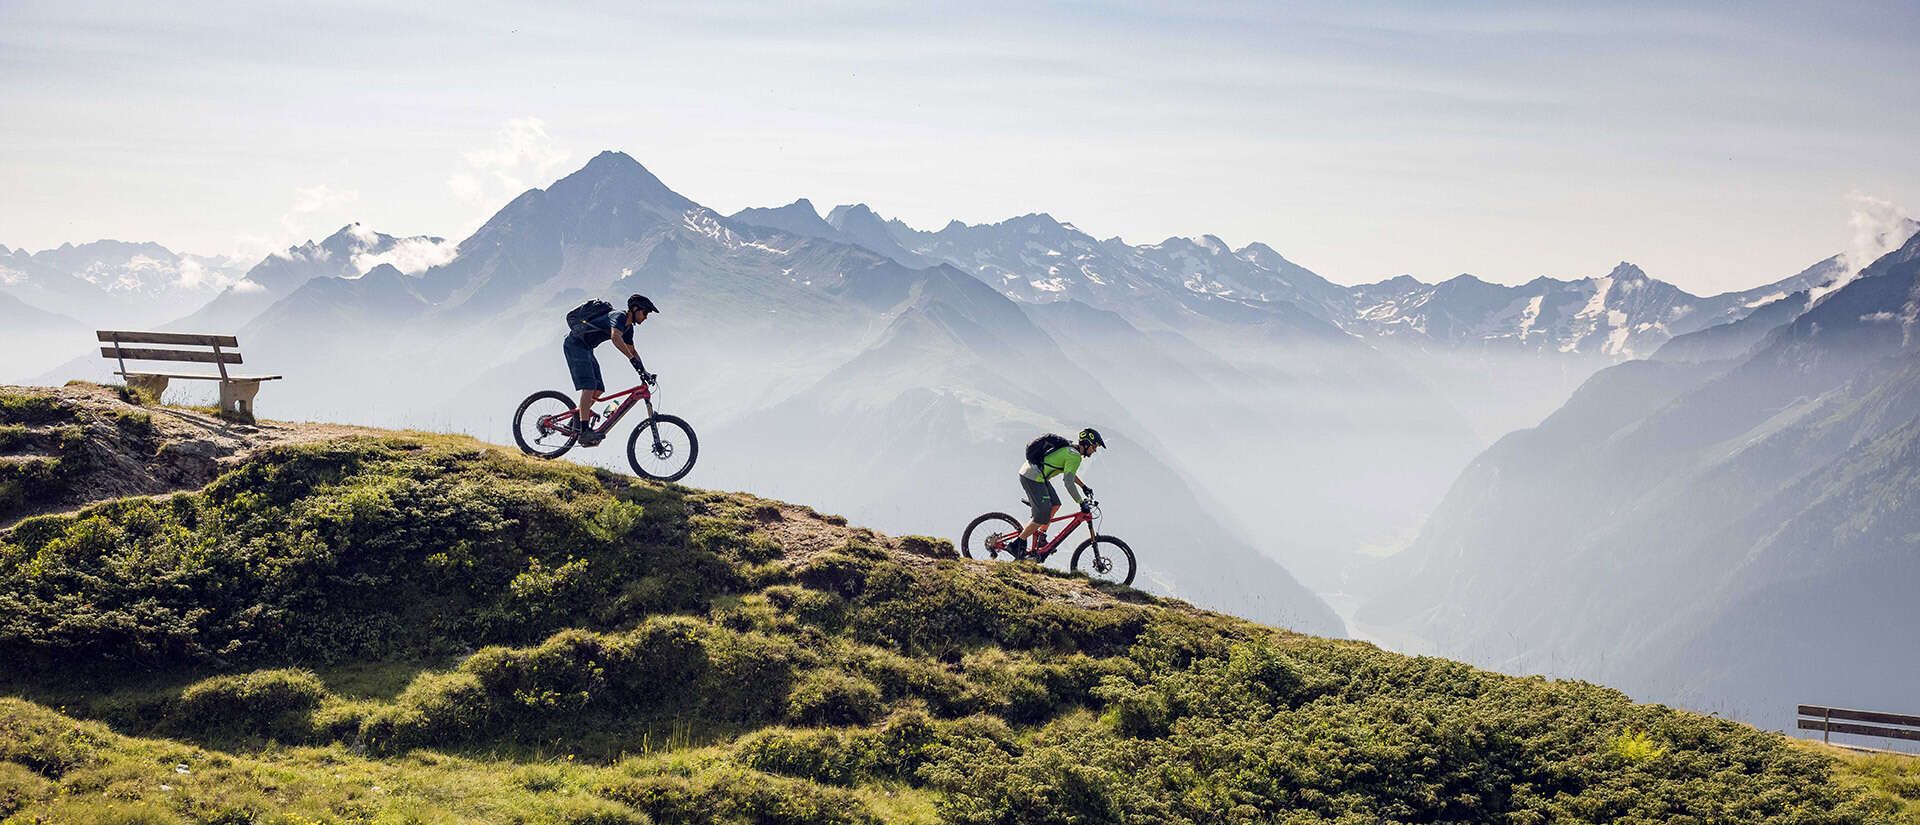  Mountain biking in the Zillertal